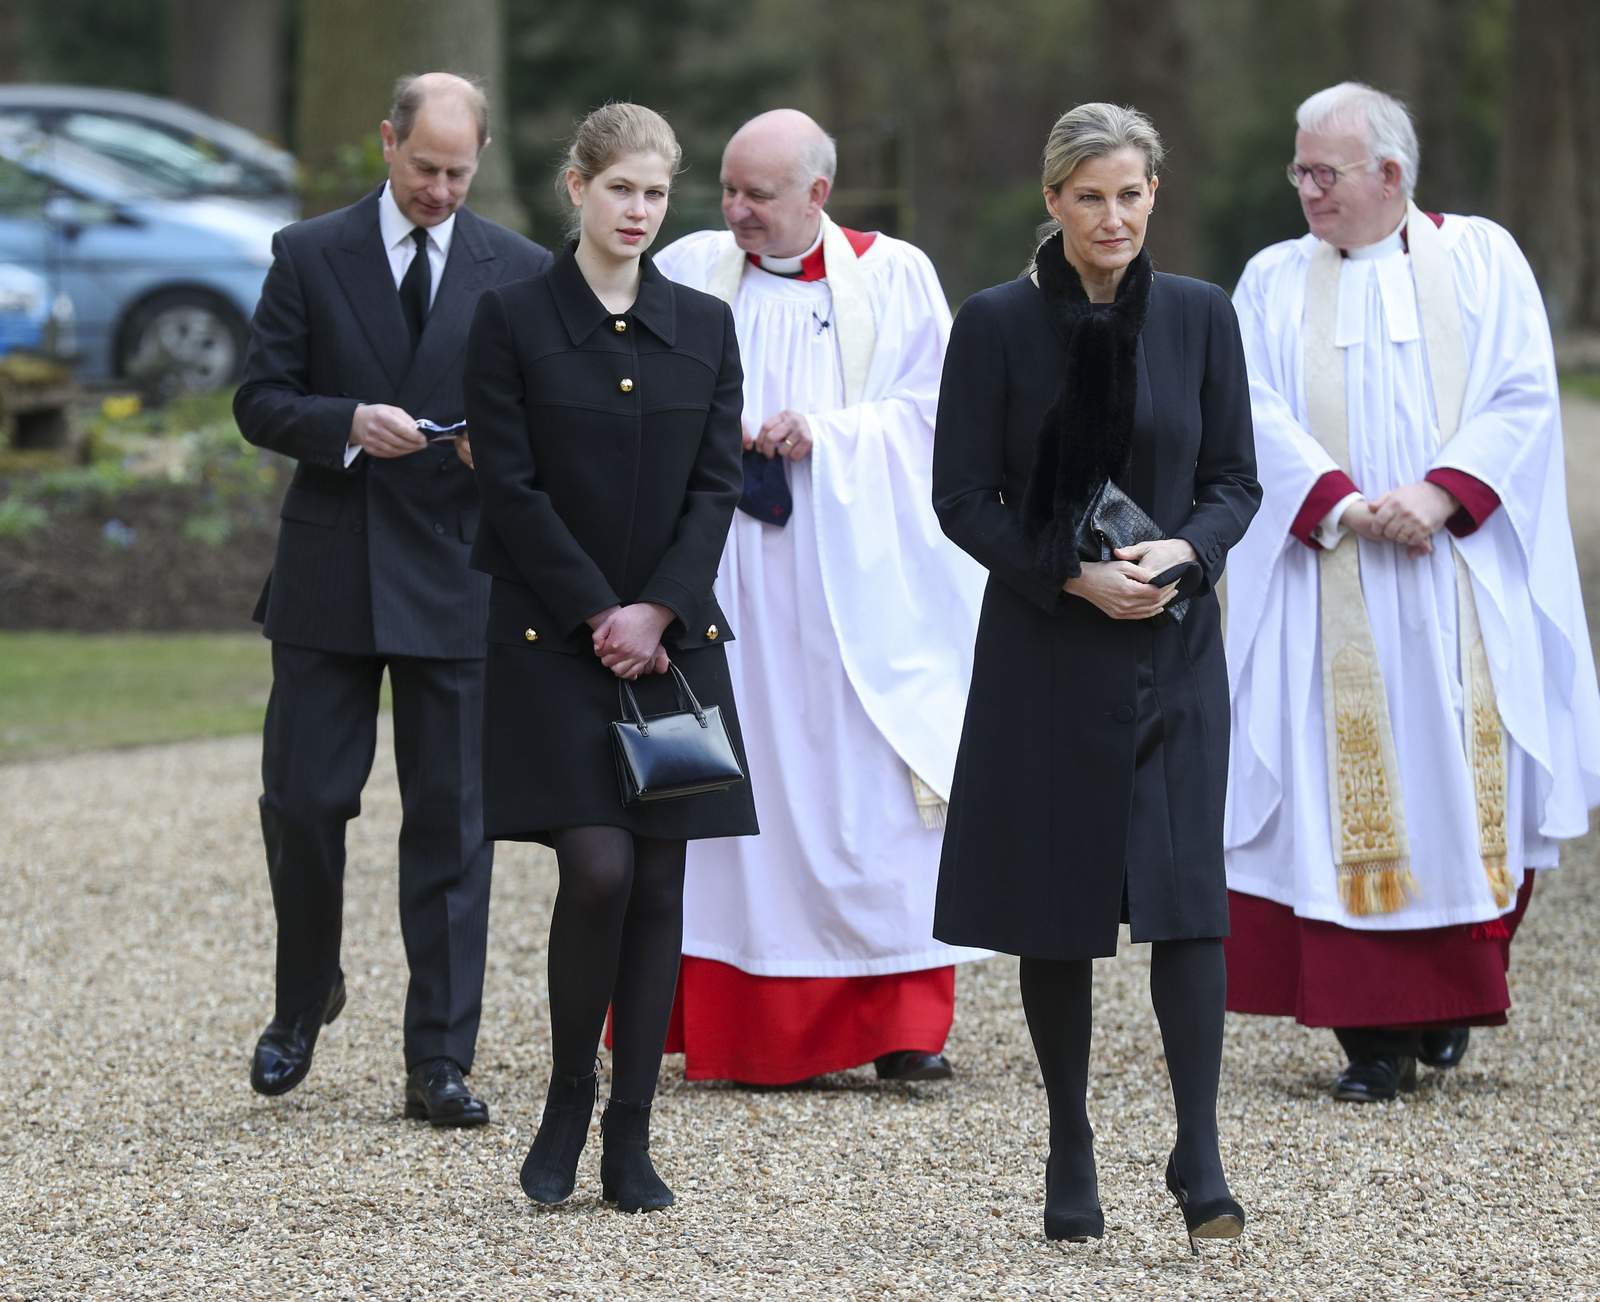 Religious leaders recall Prince Philip's spiritual curiosity